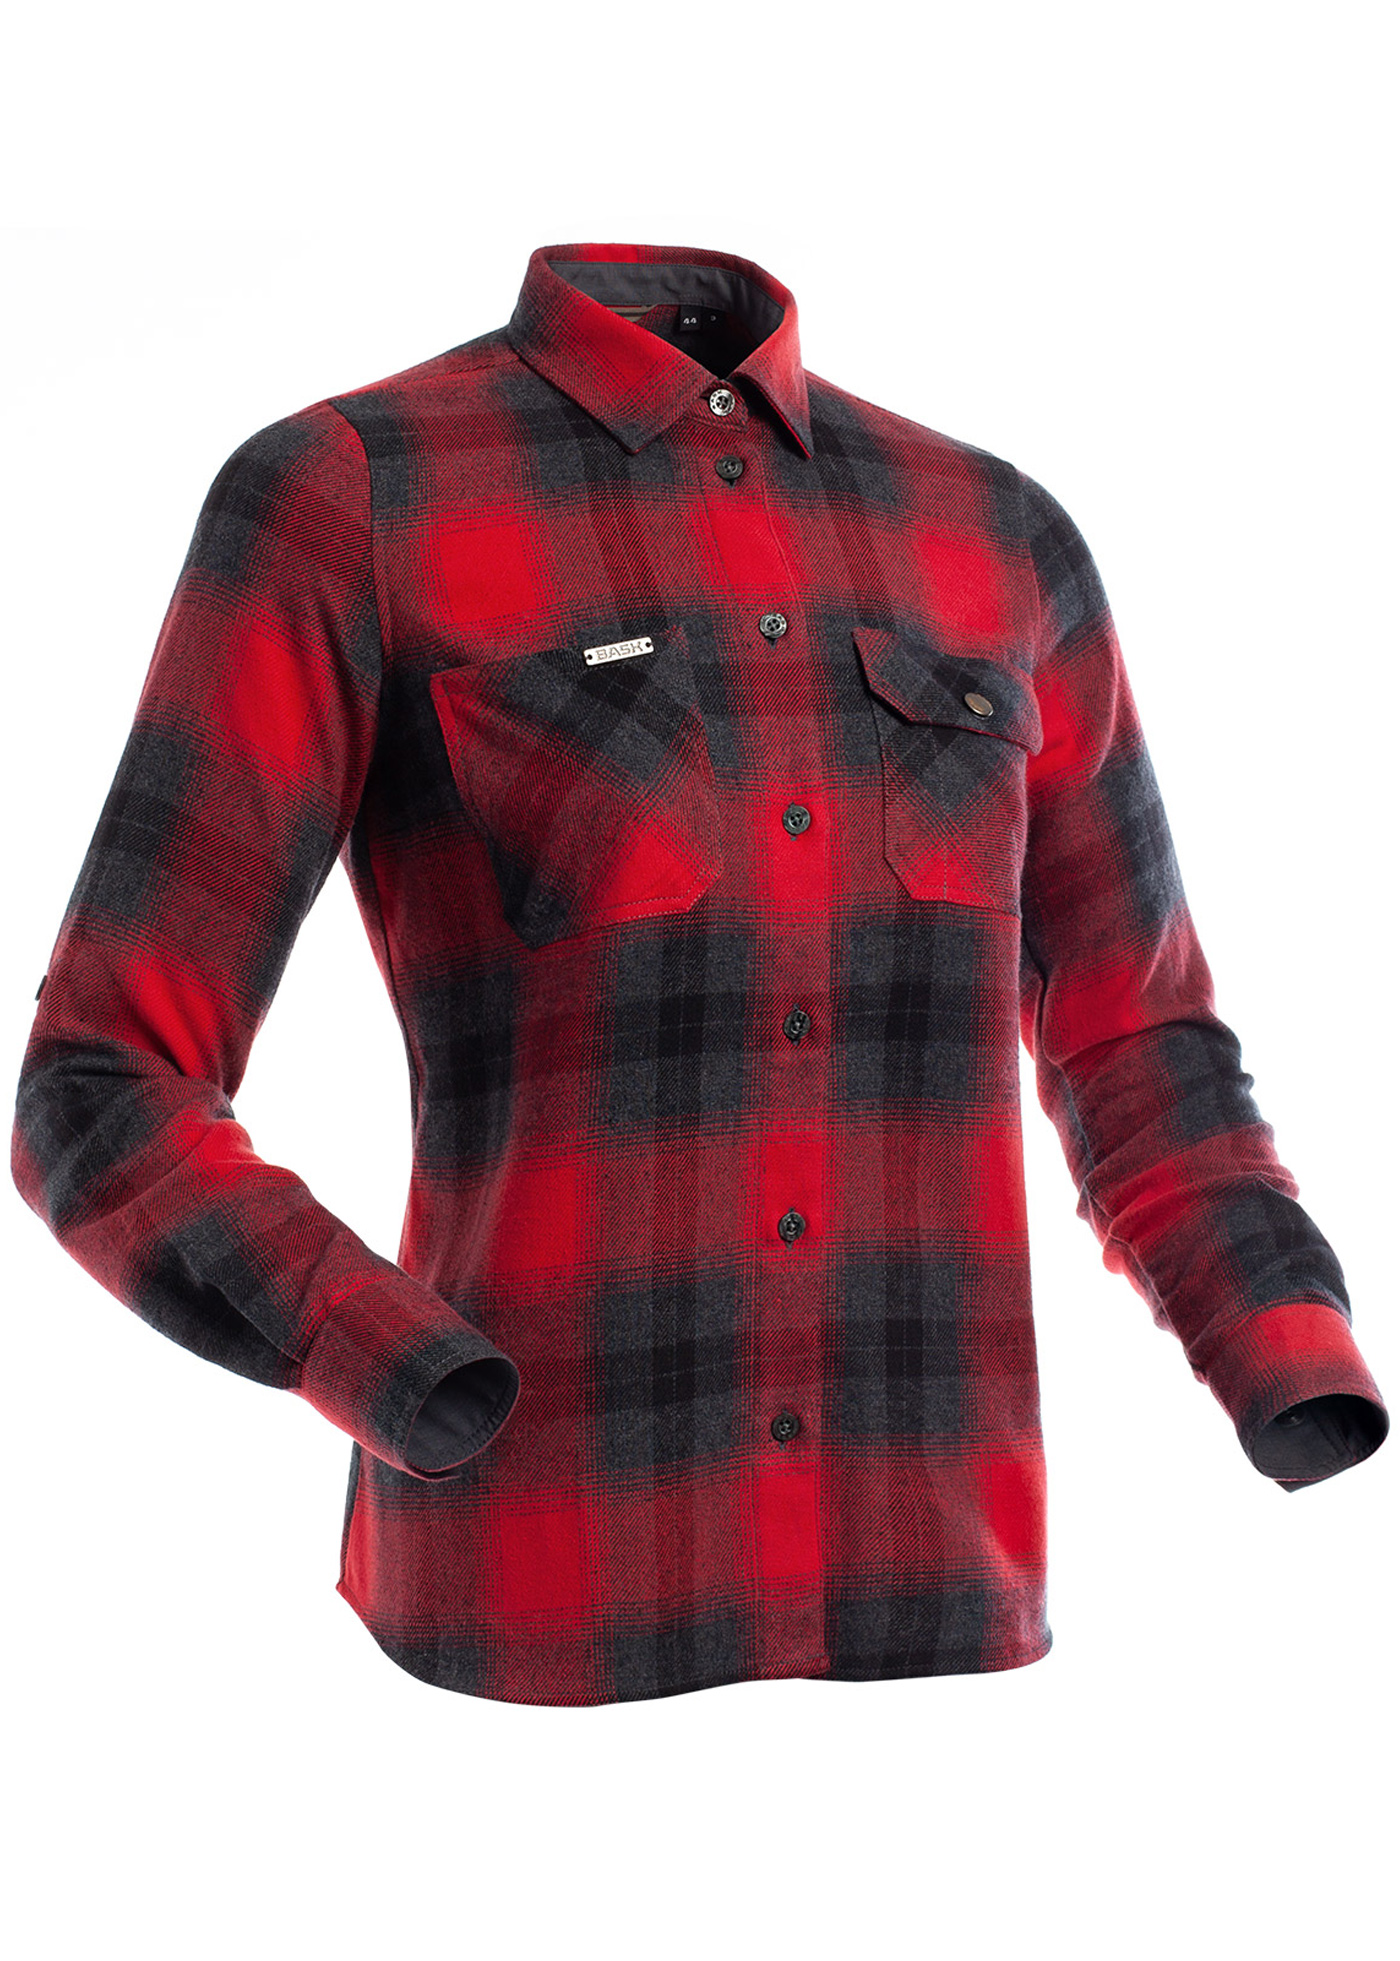 Рубашка BASK, размер 50, цвет r515.7260 19108-R515.7260-050 Lynx - фото 9